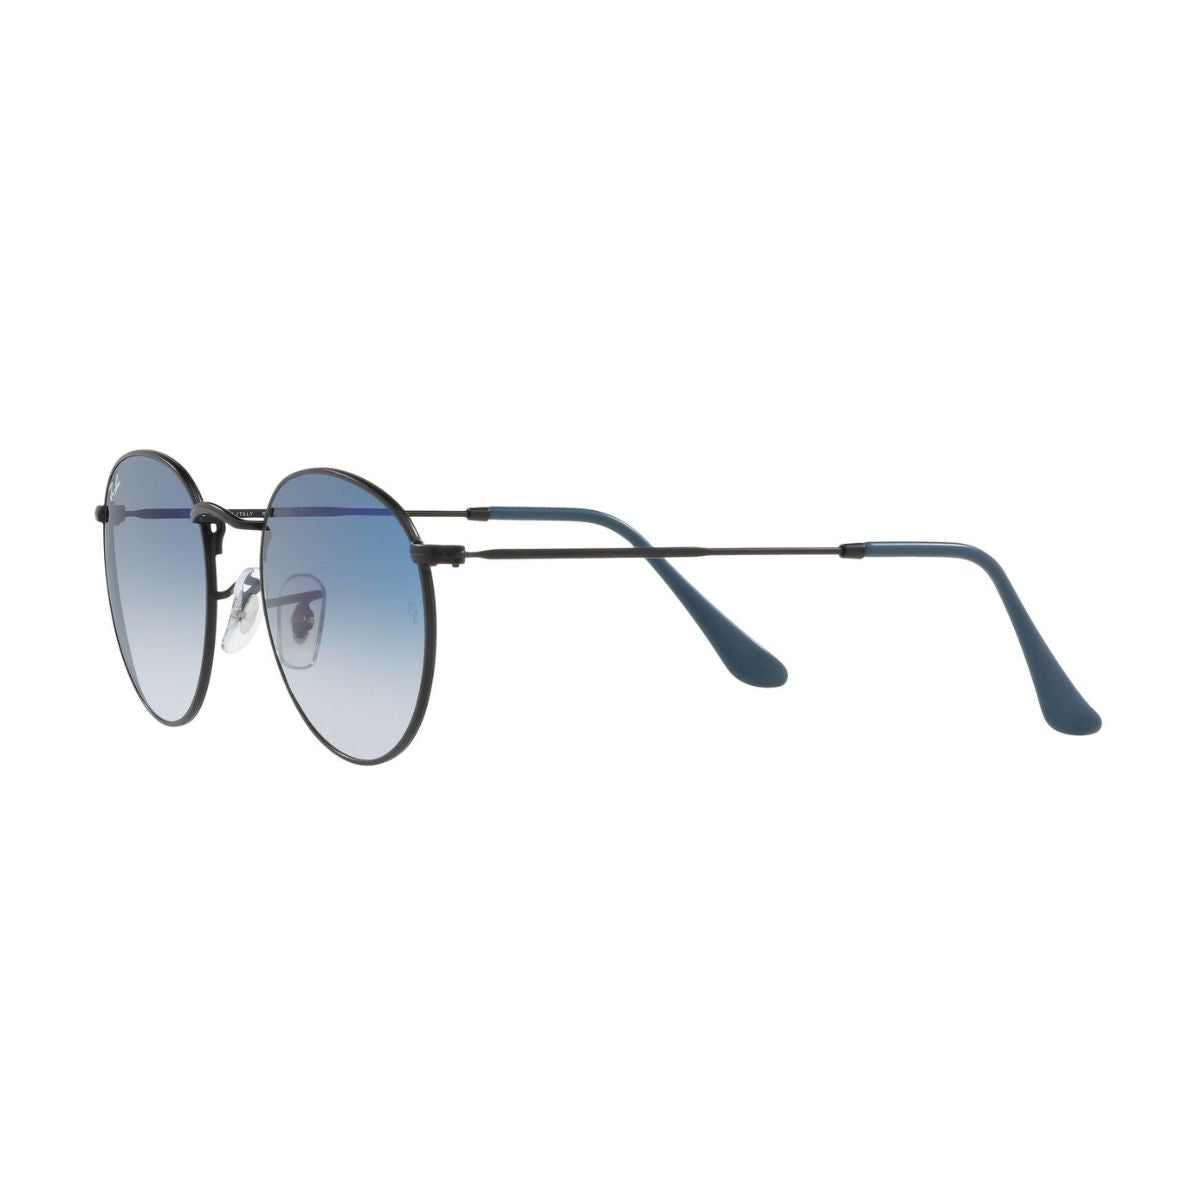 "Best Rayban 3447 006/3F Eyewear Sunglasses For Men's At Optorium"